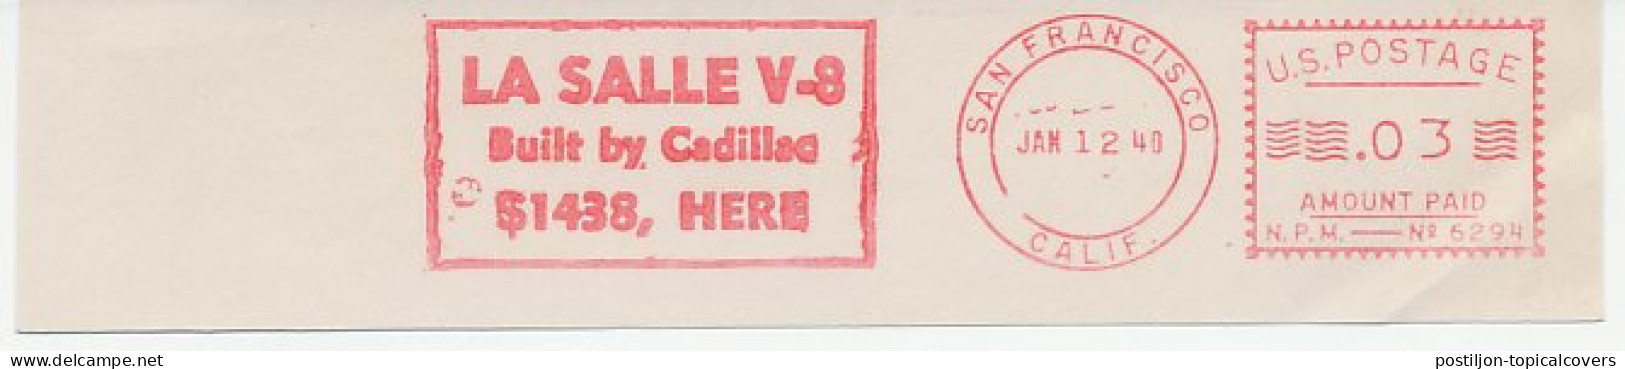 Meter Cut USA 1940 Car - Cadillac - La Salle - Automobili